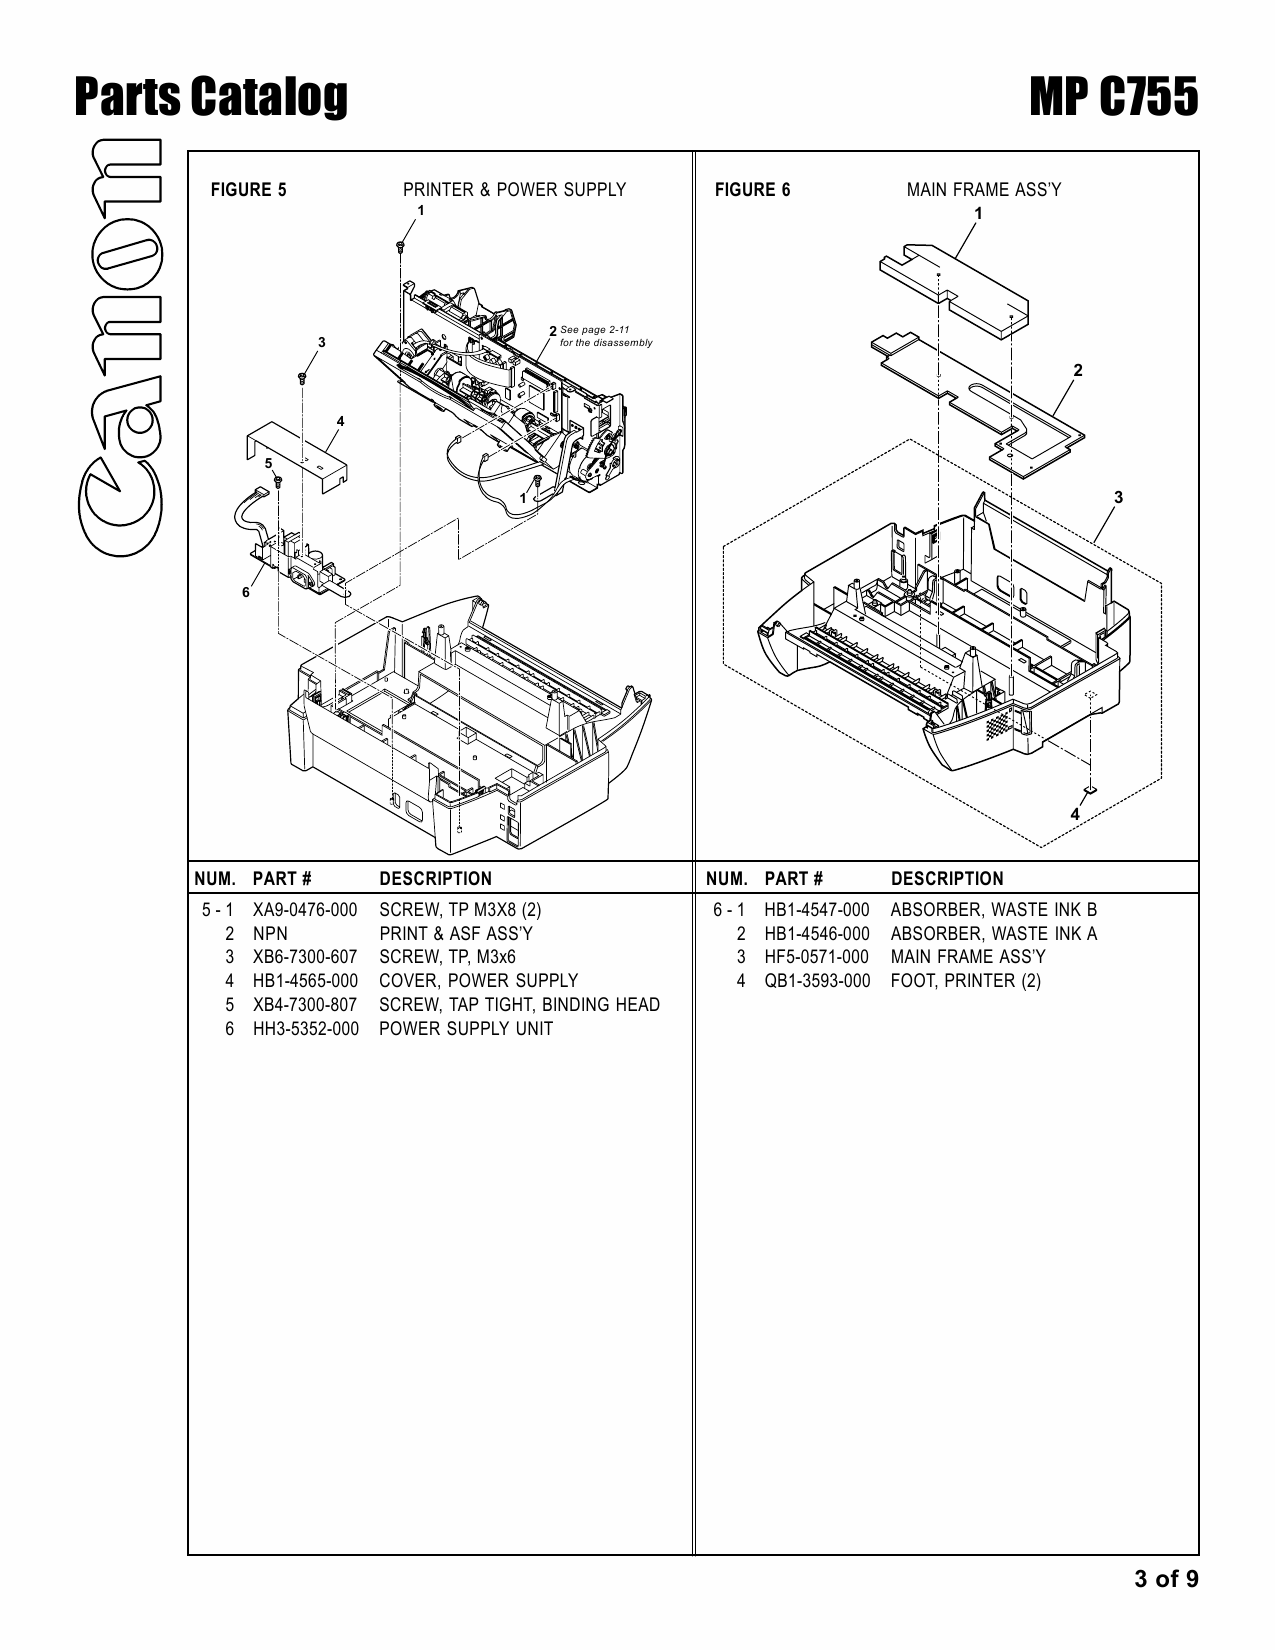 Canon MultiPASS MP-C755 Parts Catalog Manual-3